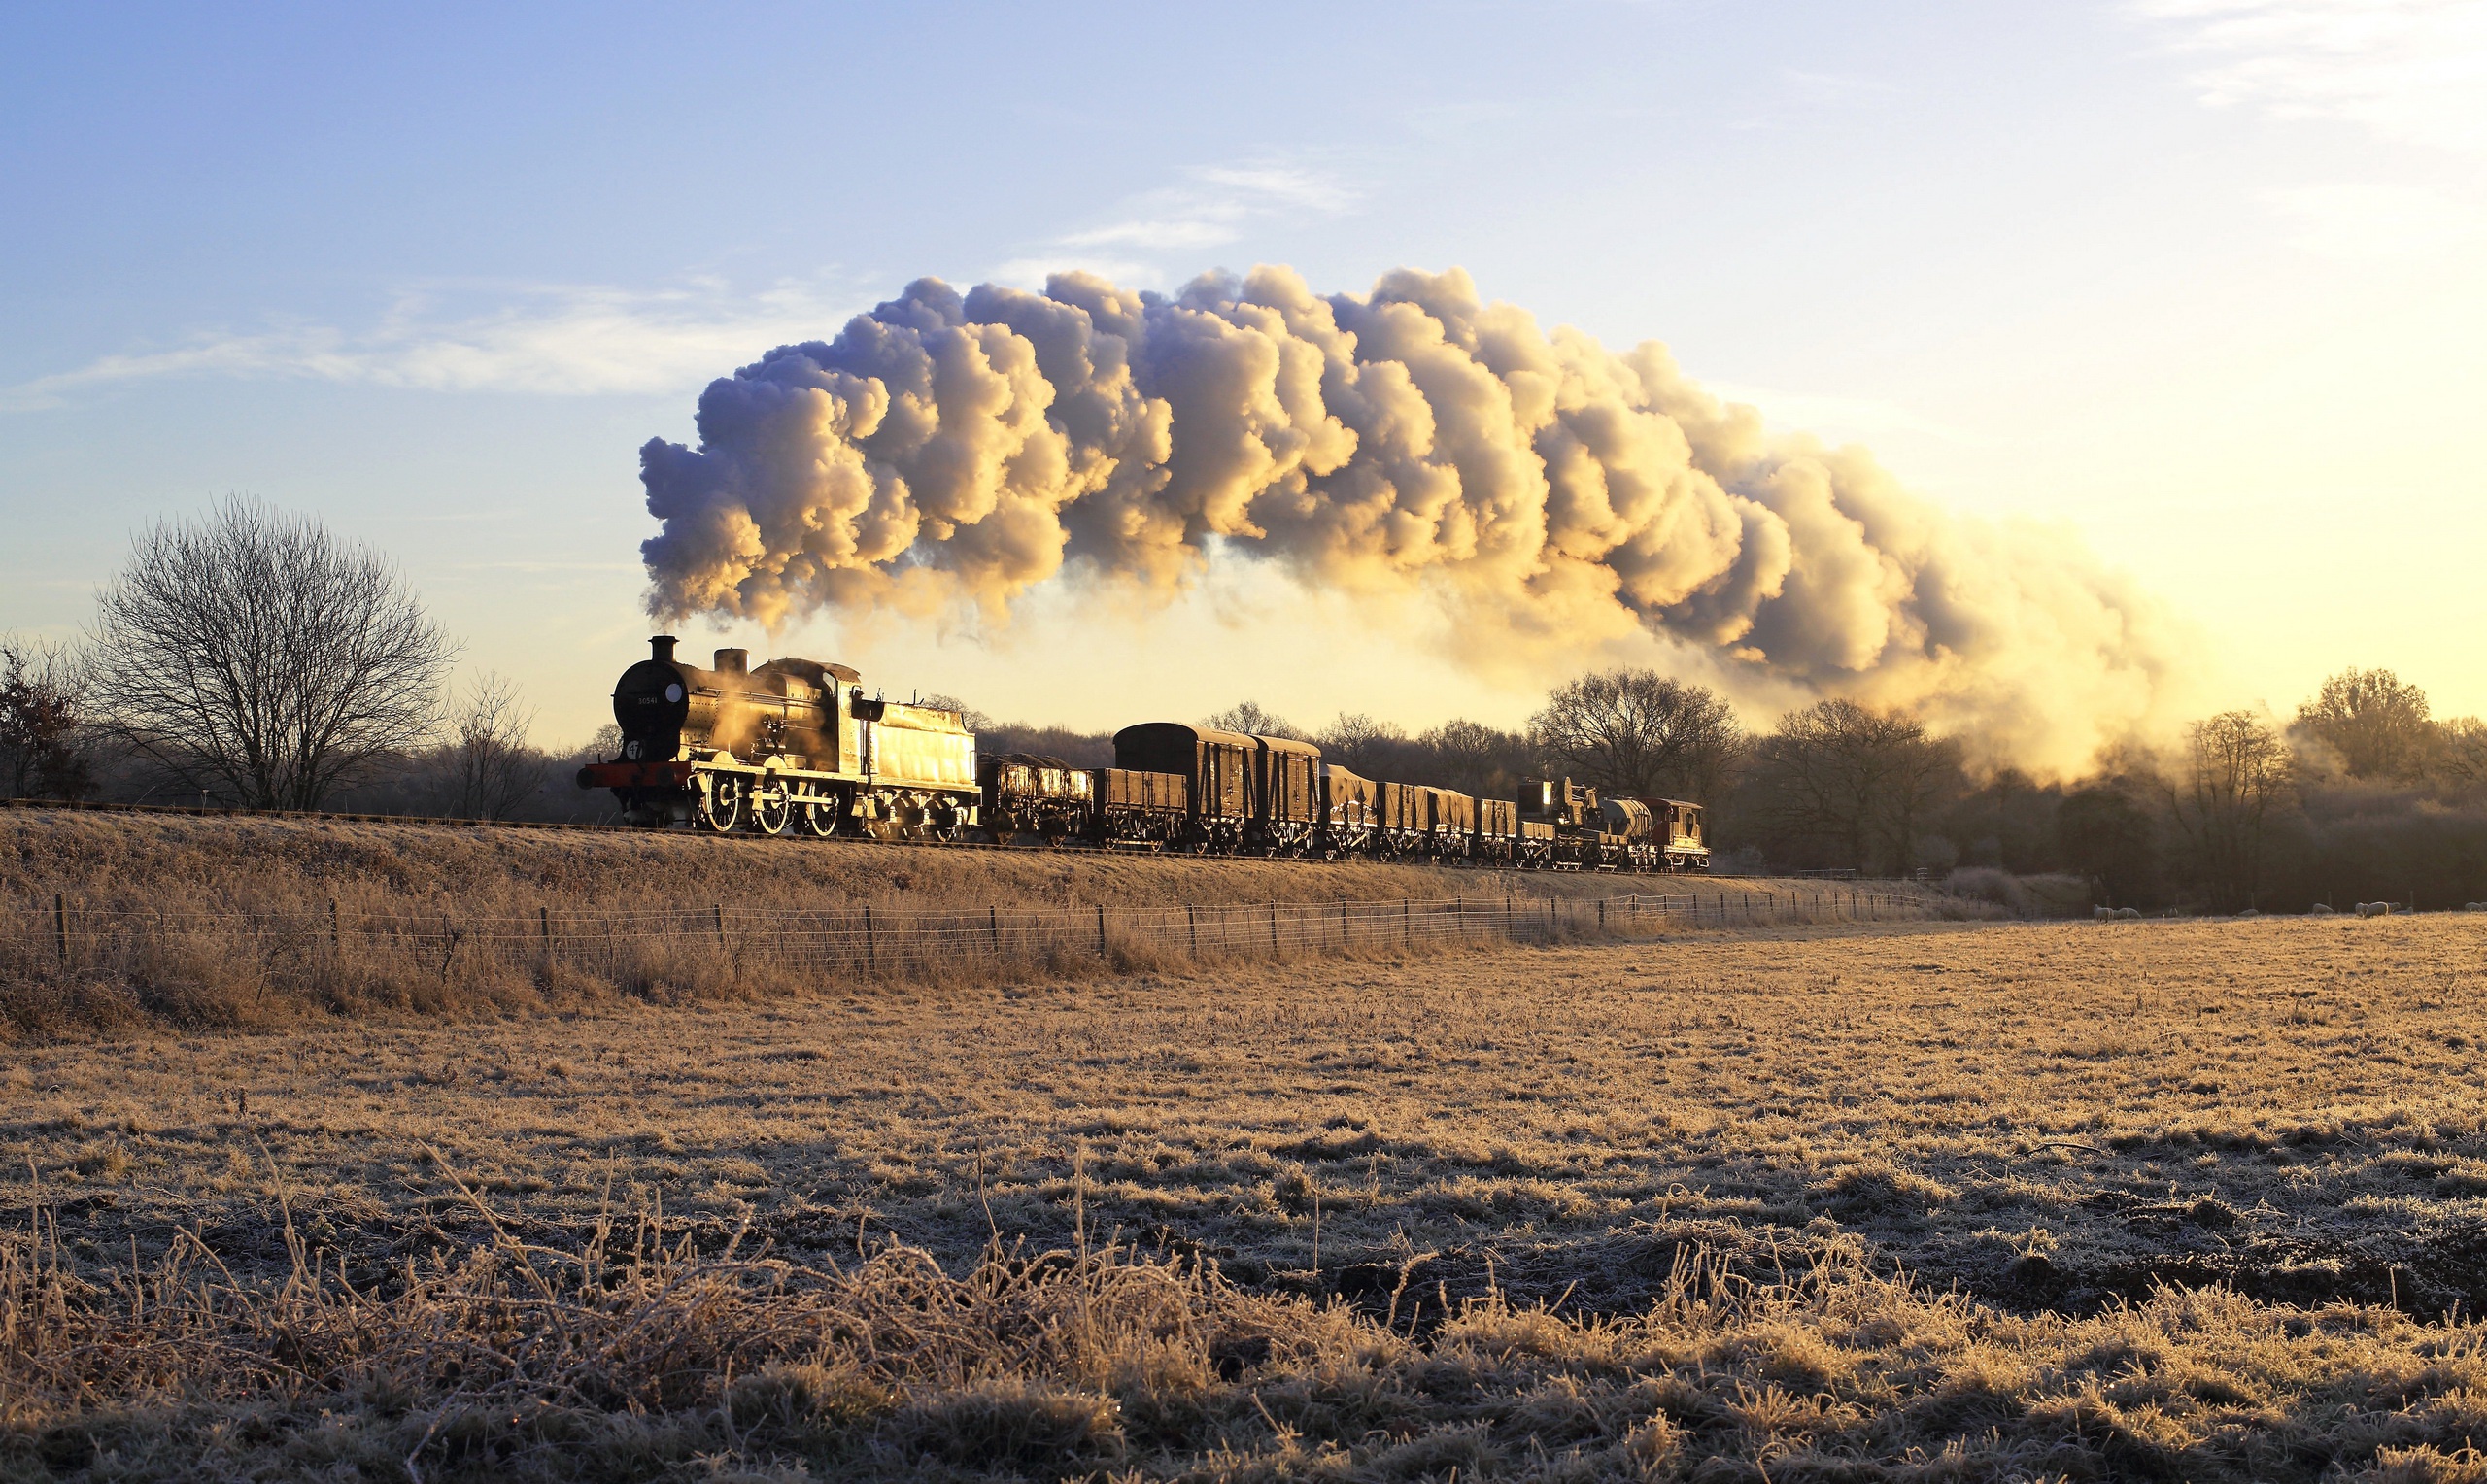 vehicles, train, locomotive, smoke, steam train